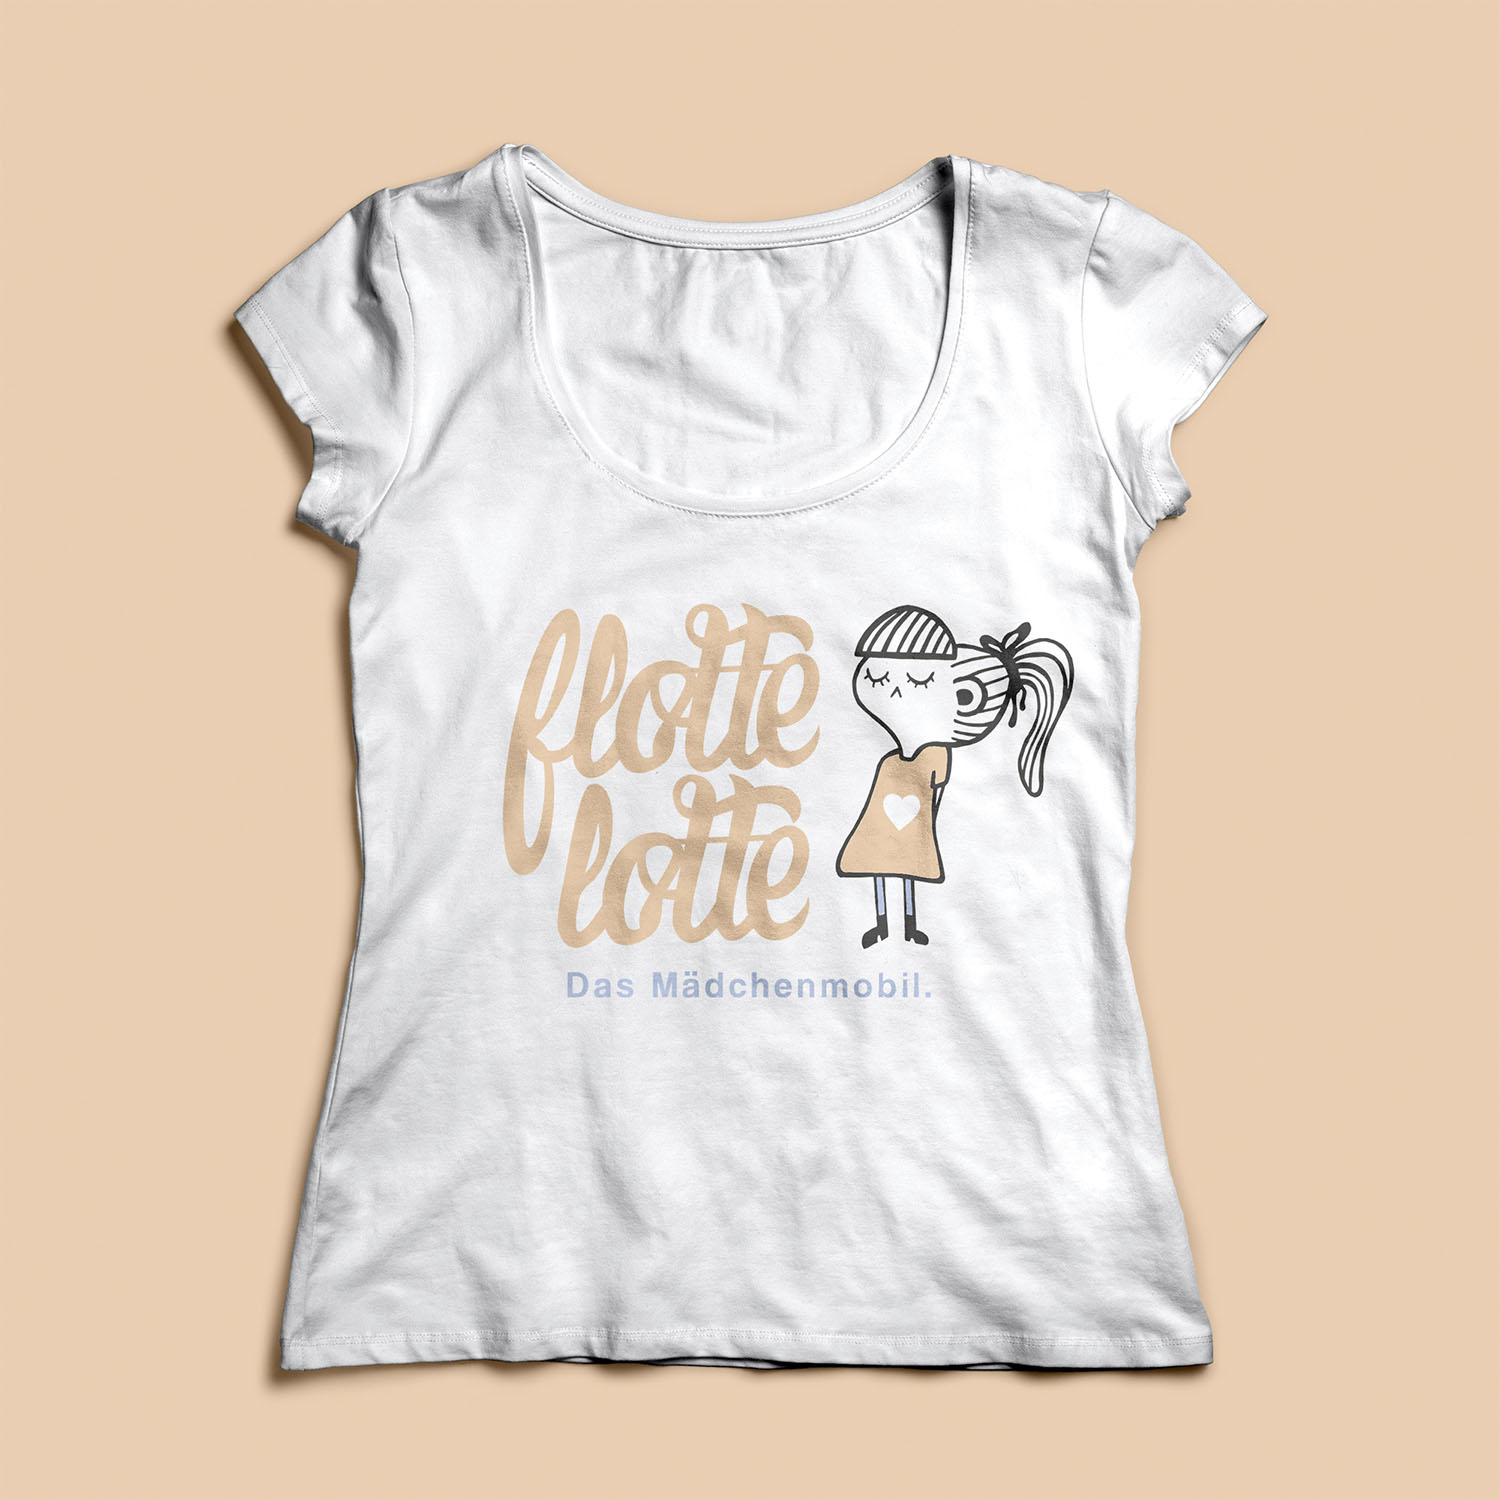 Justinvanwickeren_design_Flotte-Lotte_shirt_1_web